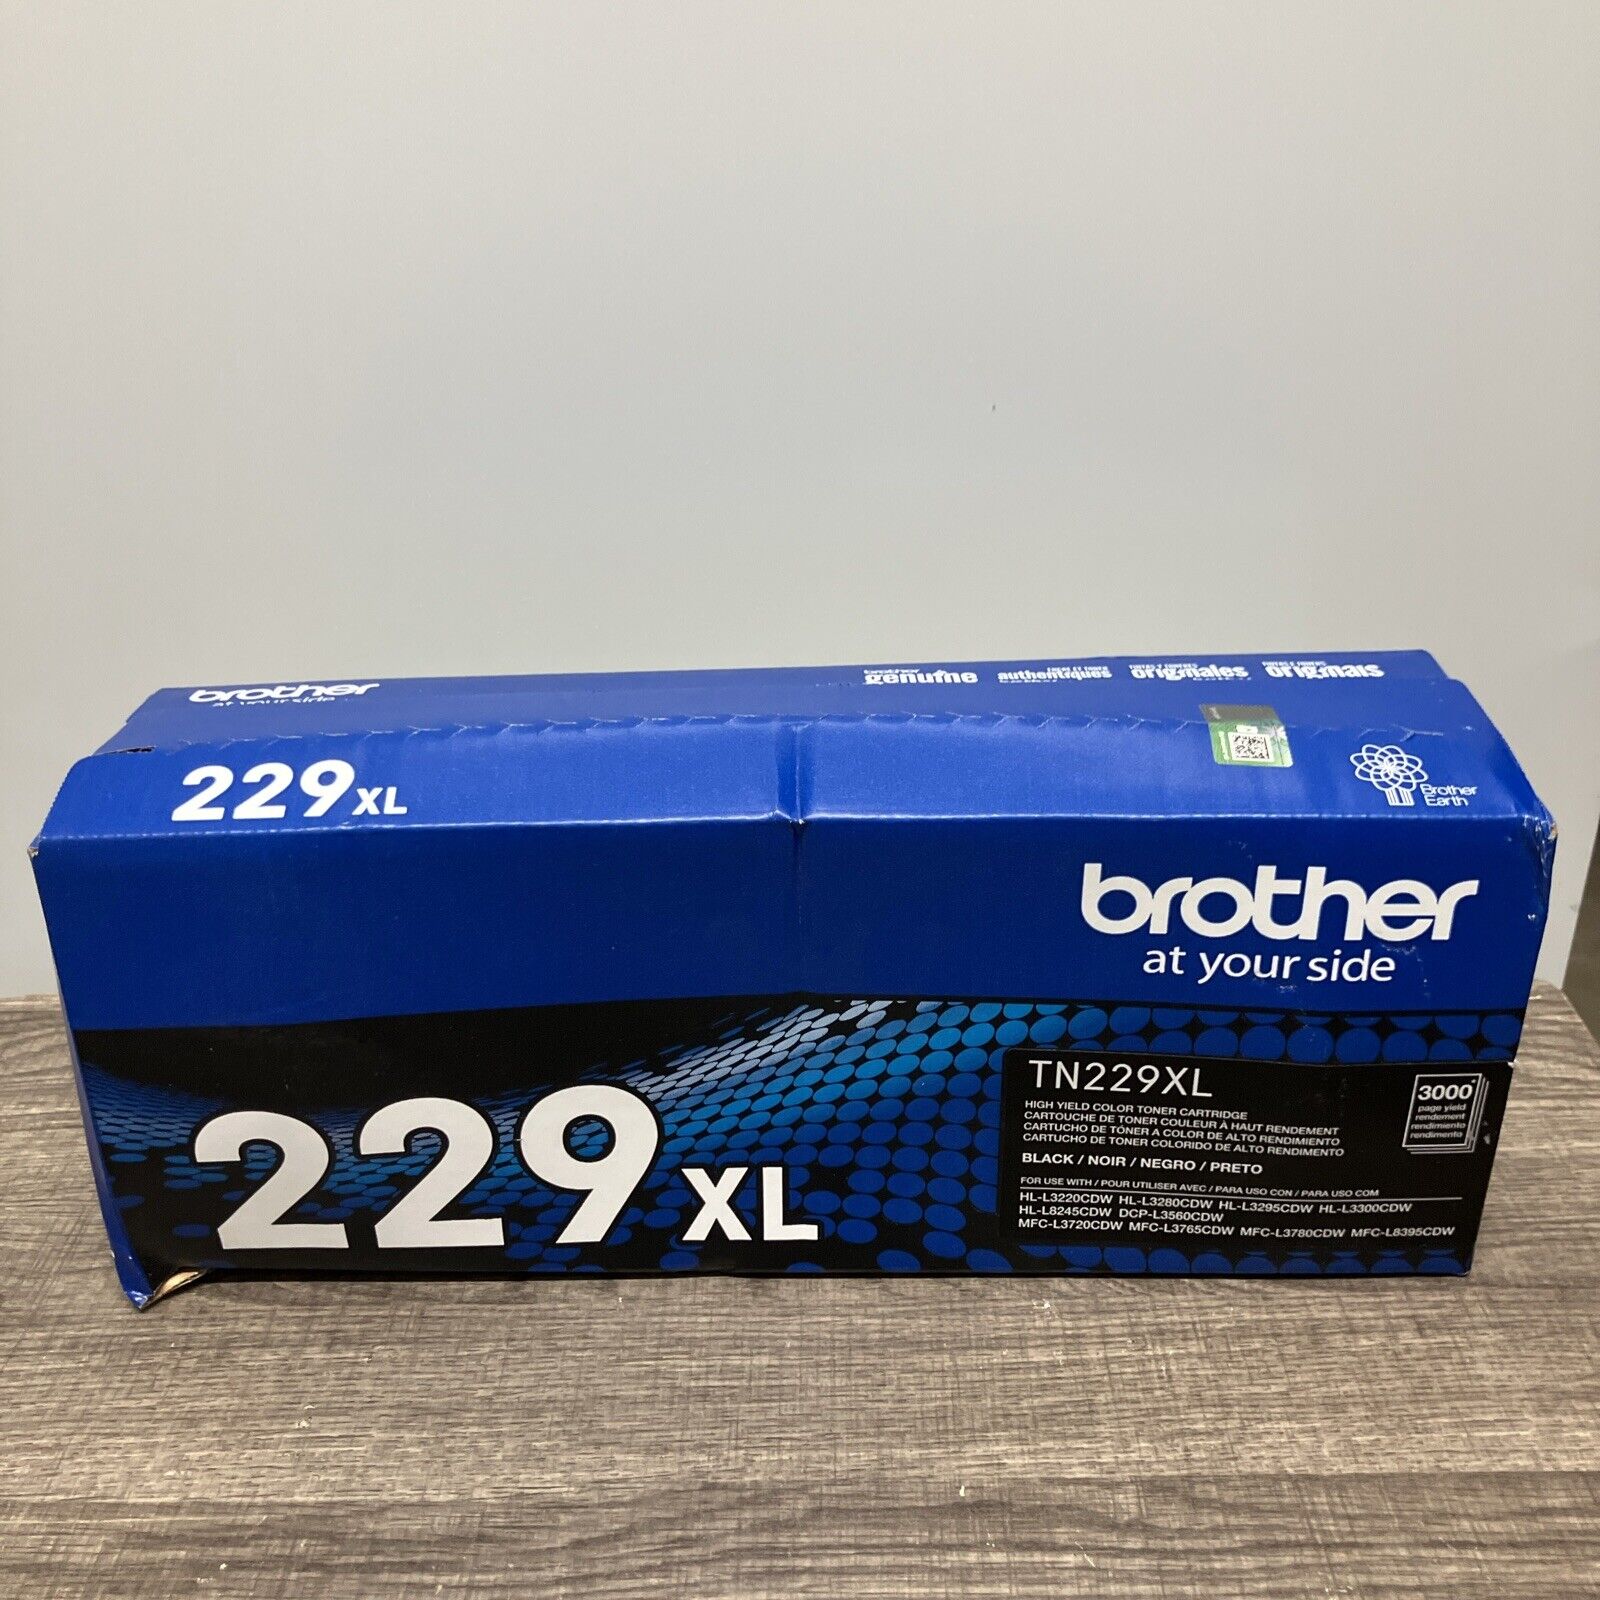 Genuine Brother 229XL TN229XL Black High-yield Black Toner Cartridge 